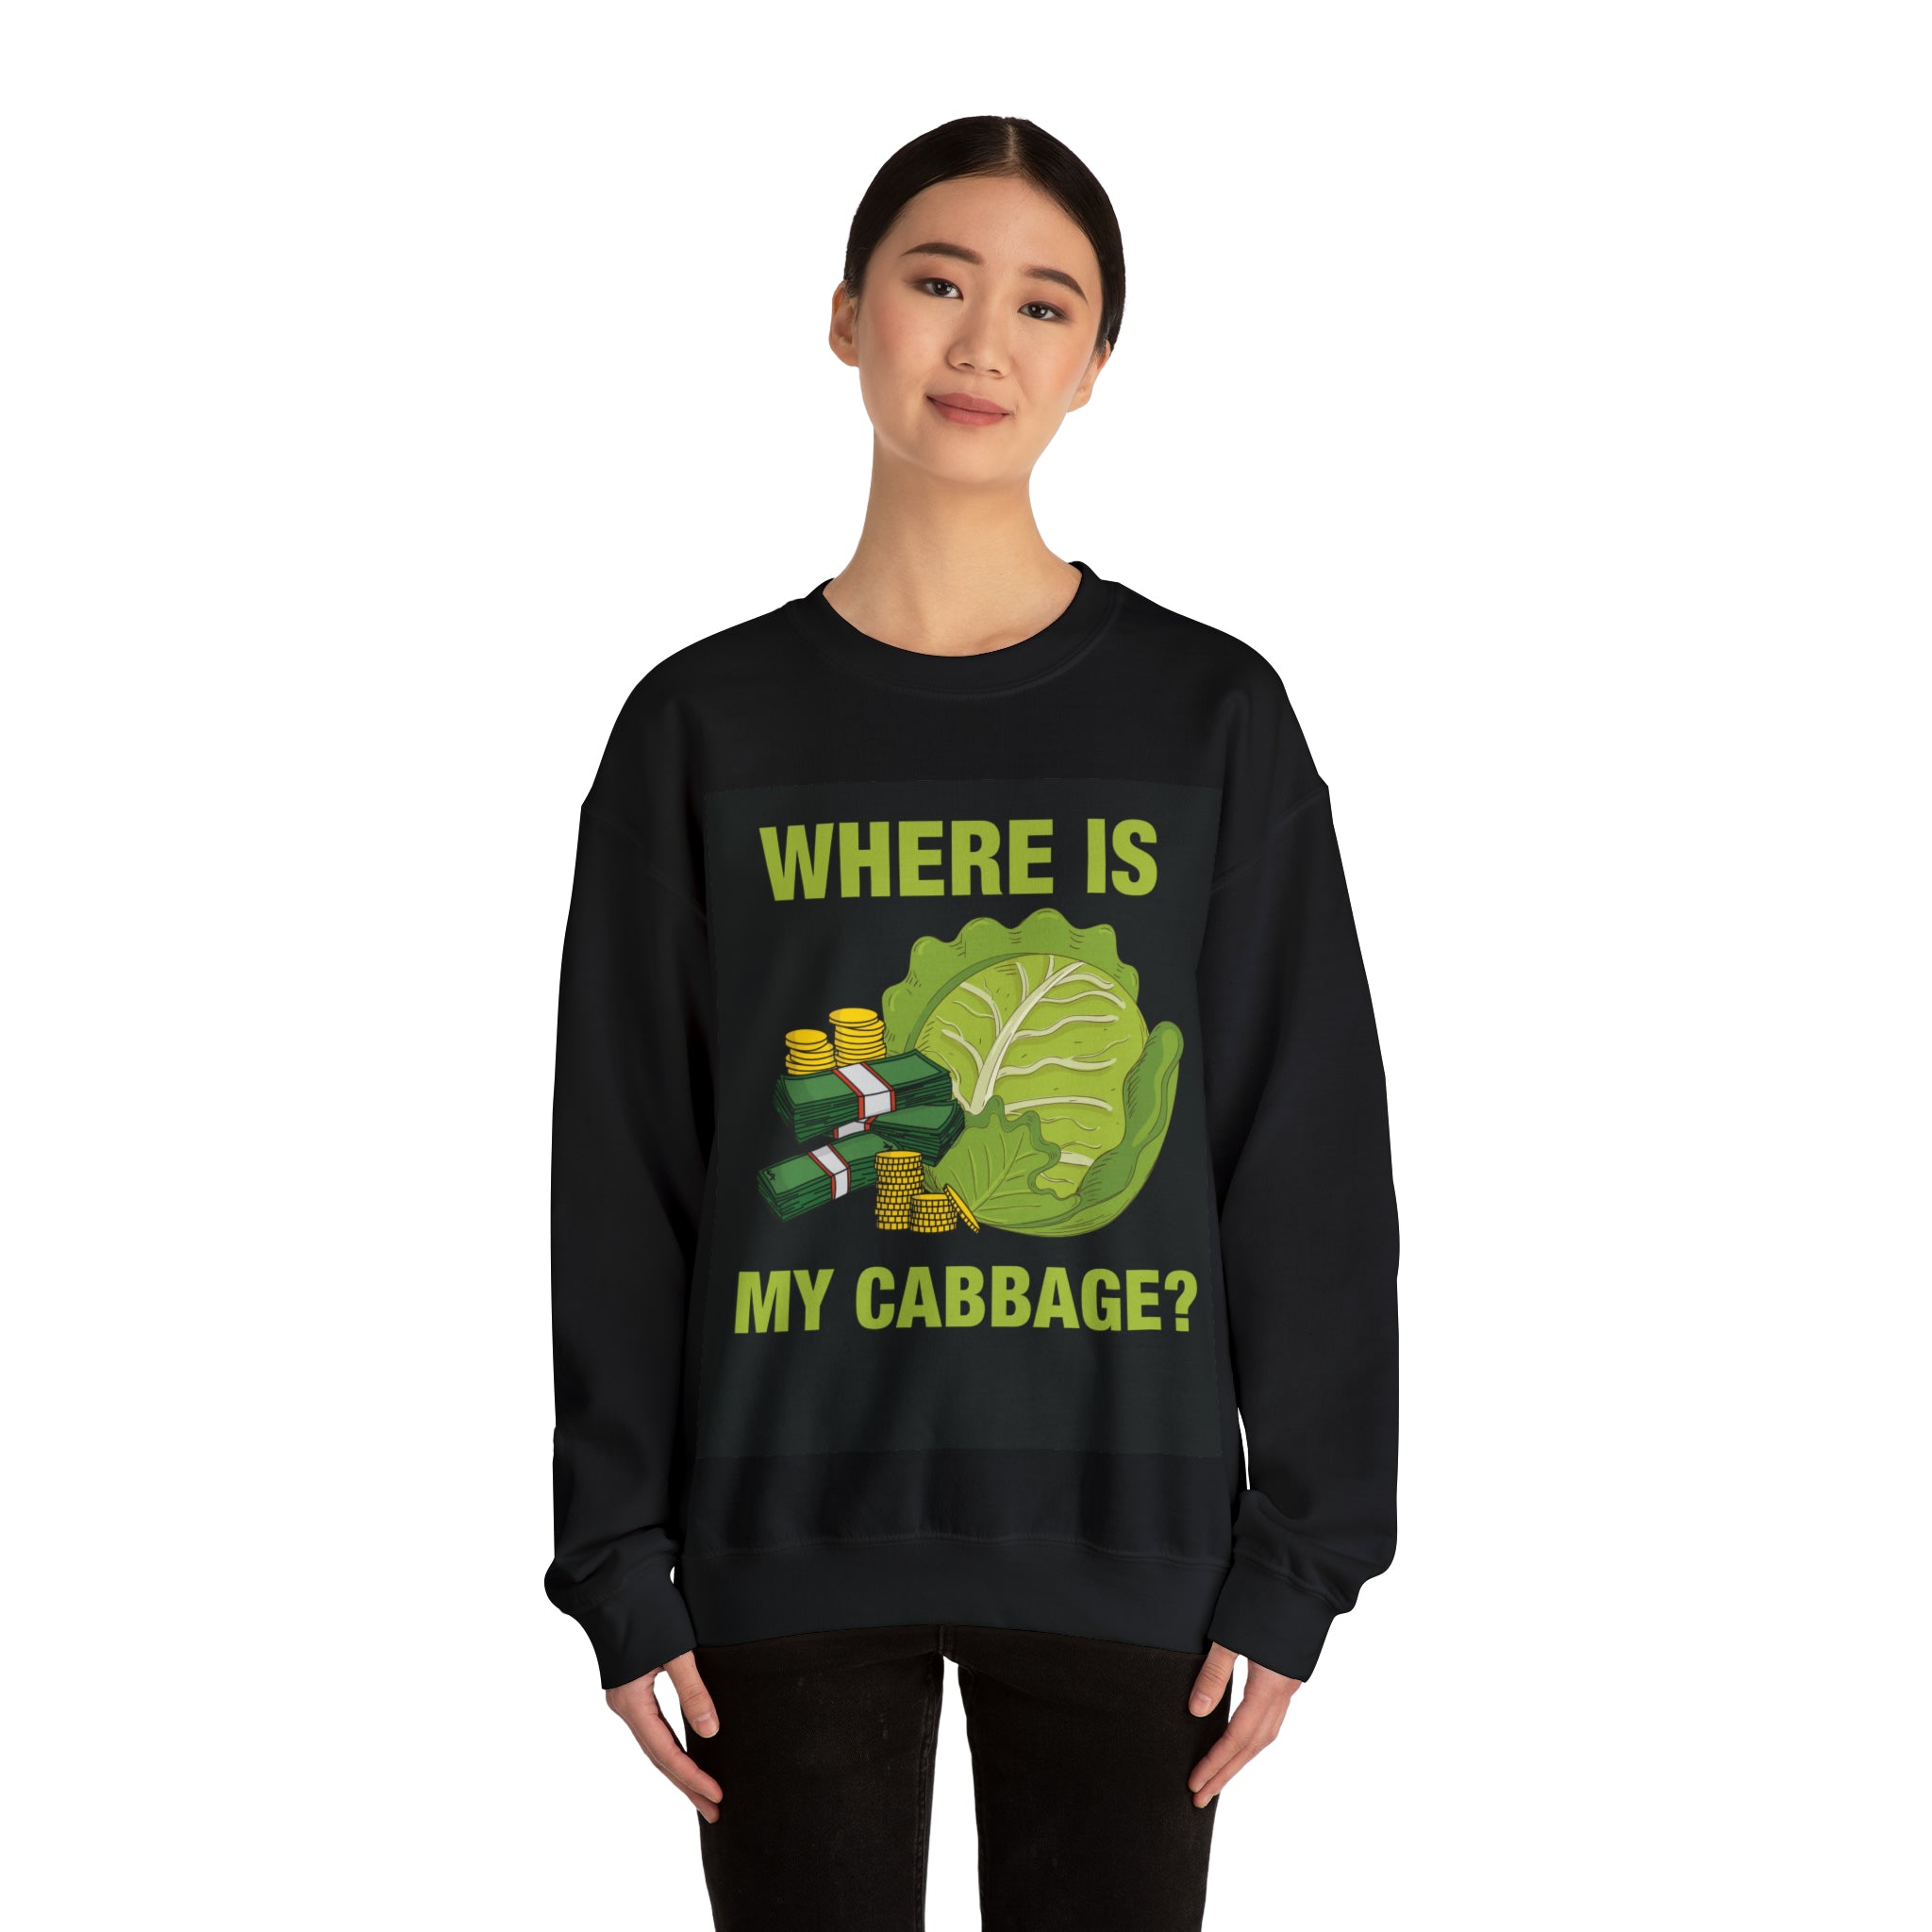 WHERE IS MY CABBAGE? Crewneck Sweatshirt